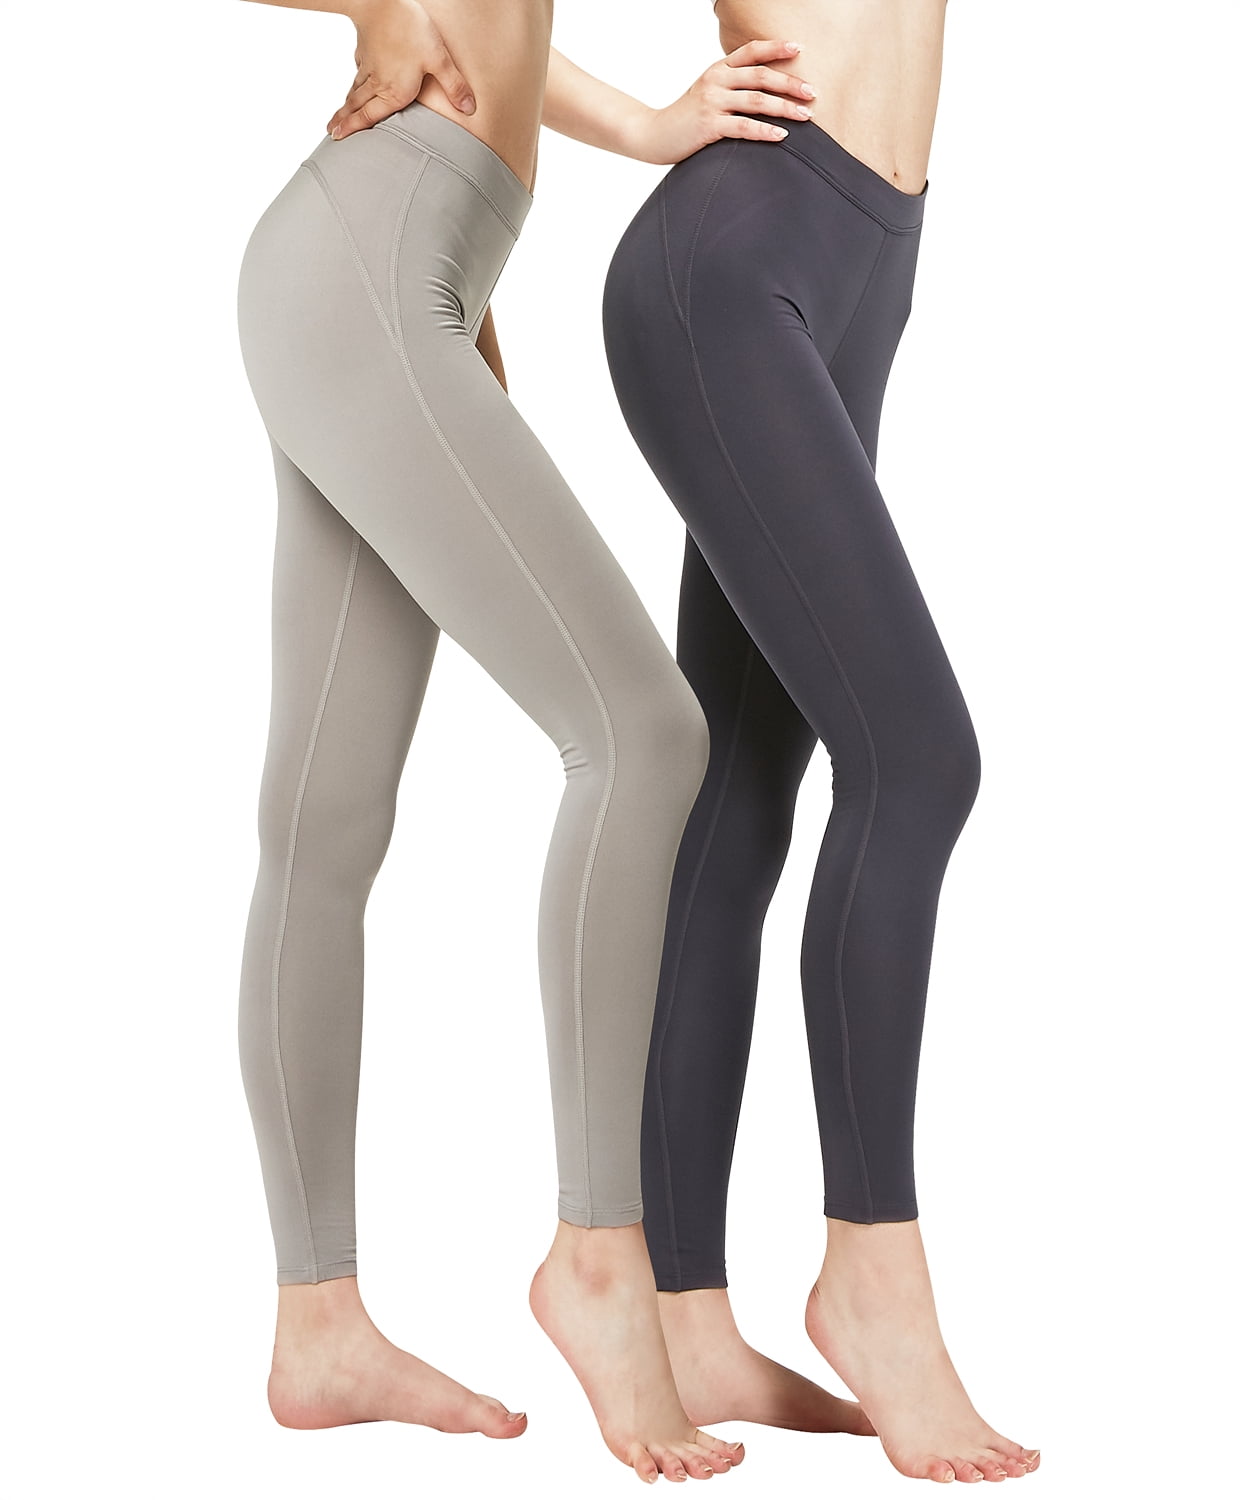 DEVOPS 2 Pack Women's Thermal Long Johns Underwear Leggings Pants (X-Large,  Charcoal/Light Grey) 